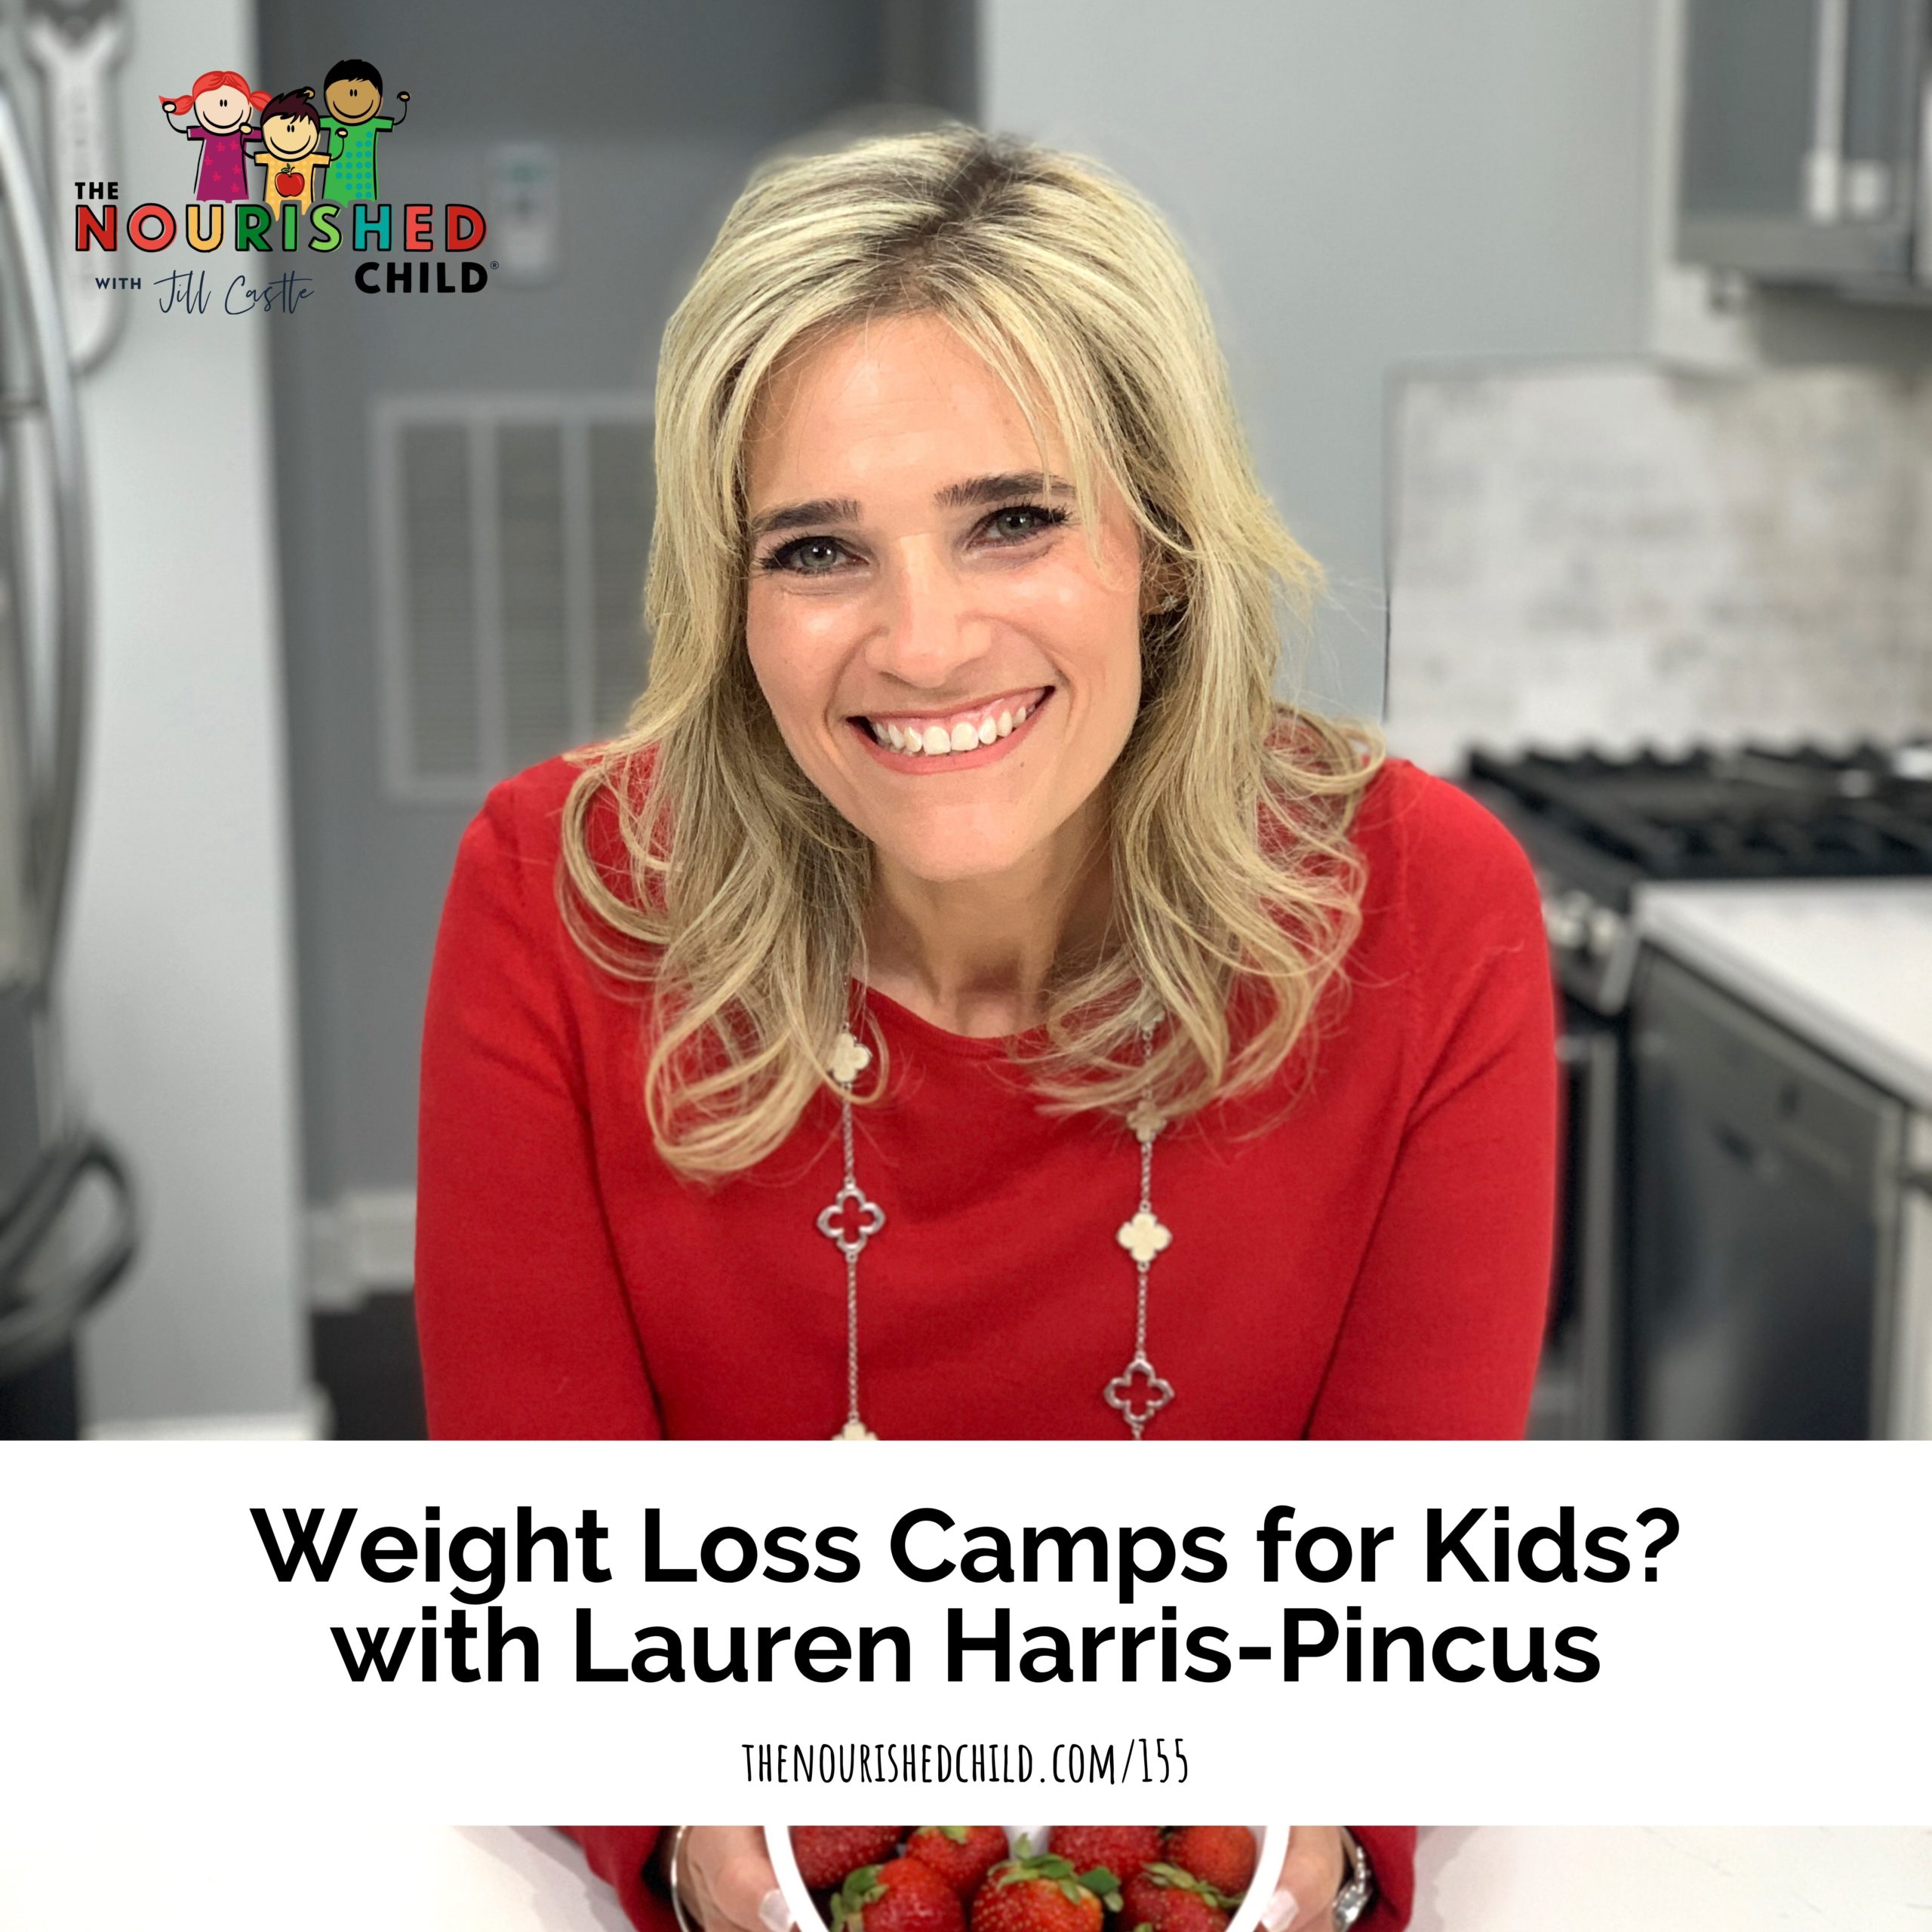 Lauren Harris Pincus on The Nourished Child podcast